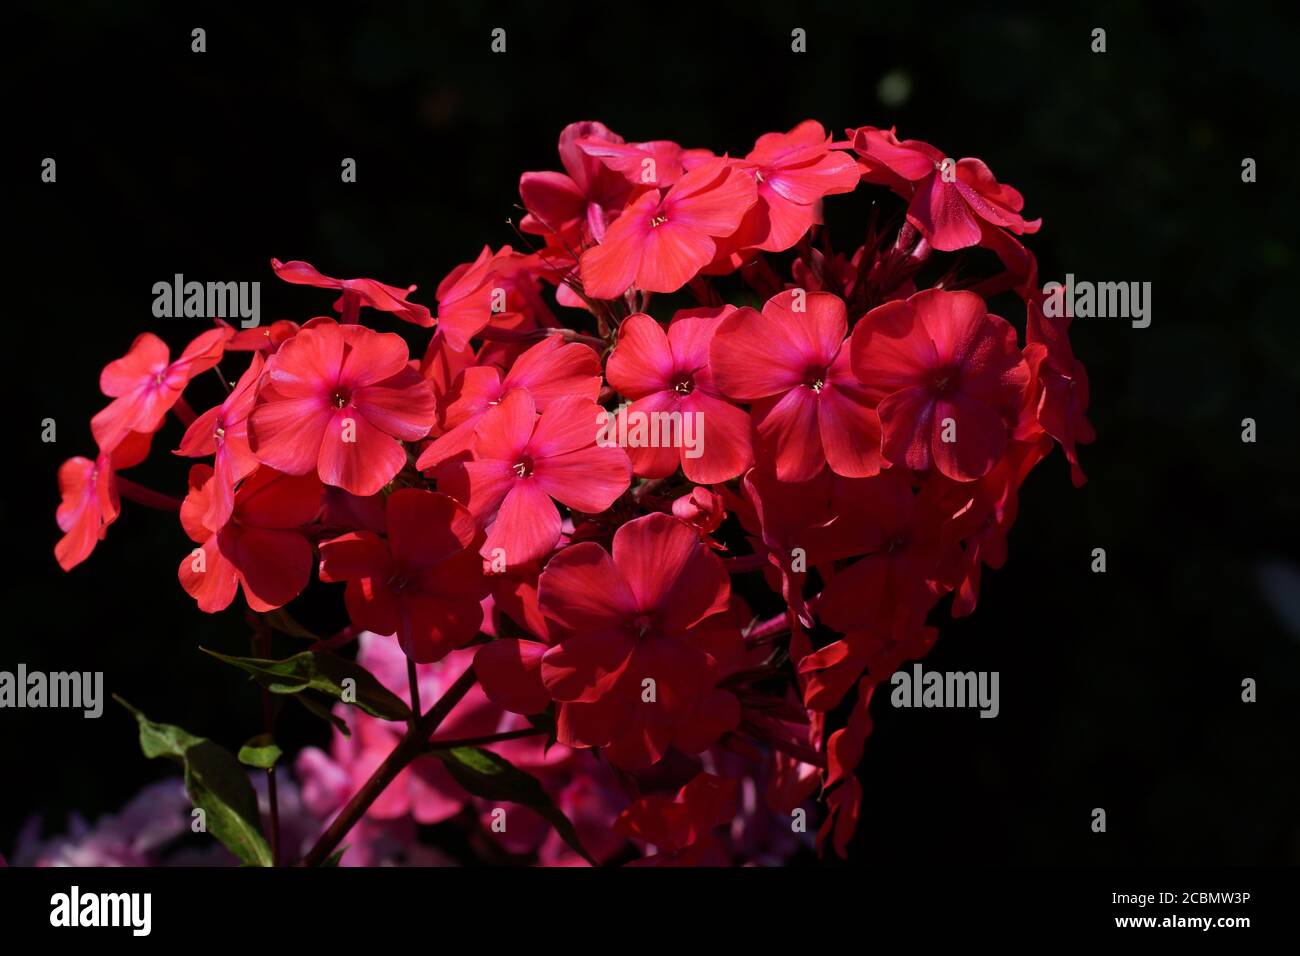 Red flowers. Phlox paniculata, fall phlox, garden phlox, perennial phlox or summer phlox Stock Photo